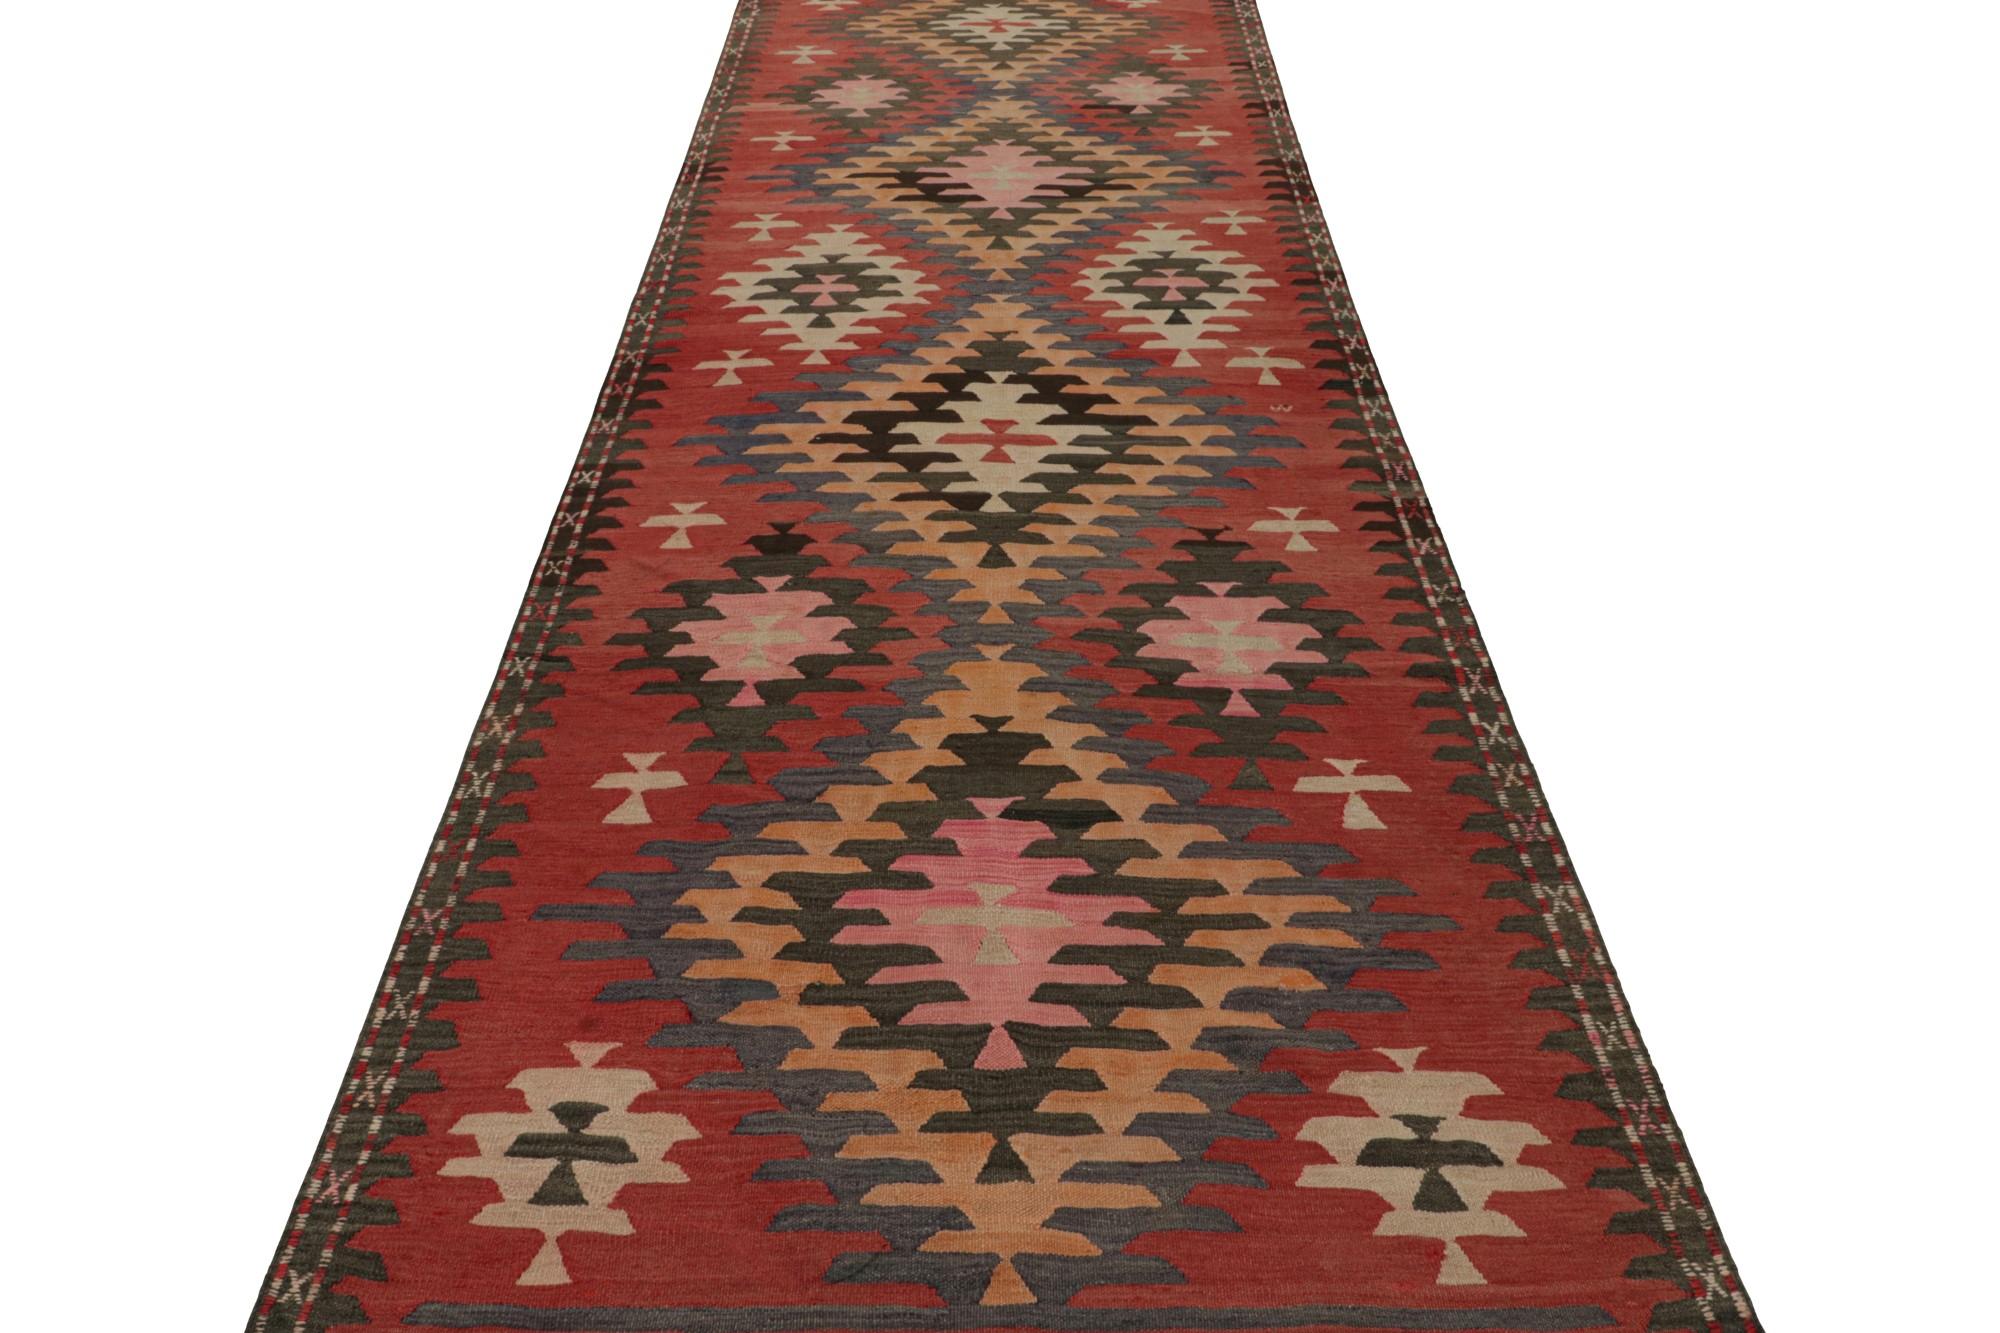 Hand-Woven Vintage Afghani Tribal Kilim Polychromatic Geometric Patterns, from Rug & Kilim For Sale